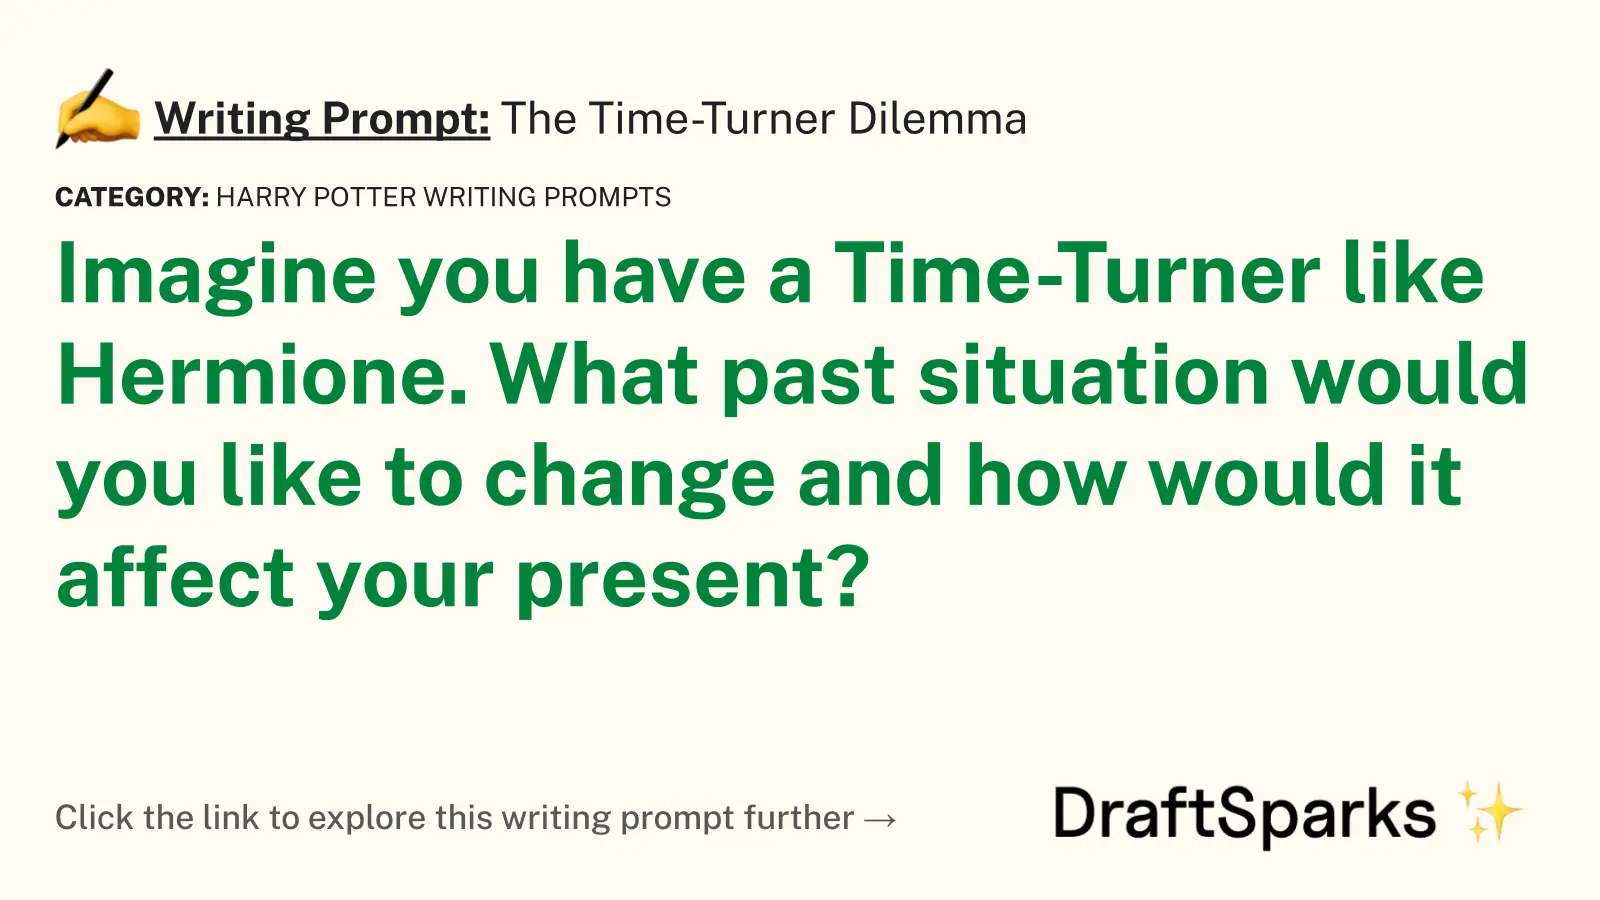 The Time-Turner Dilemma